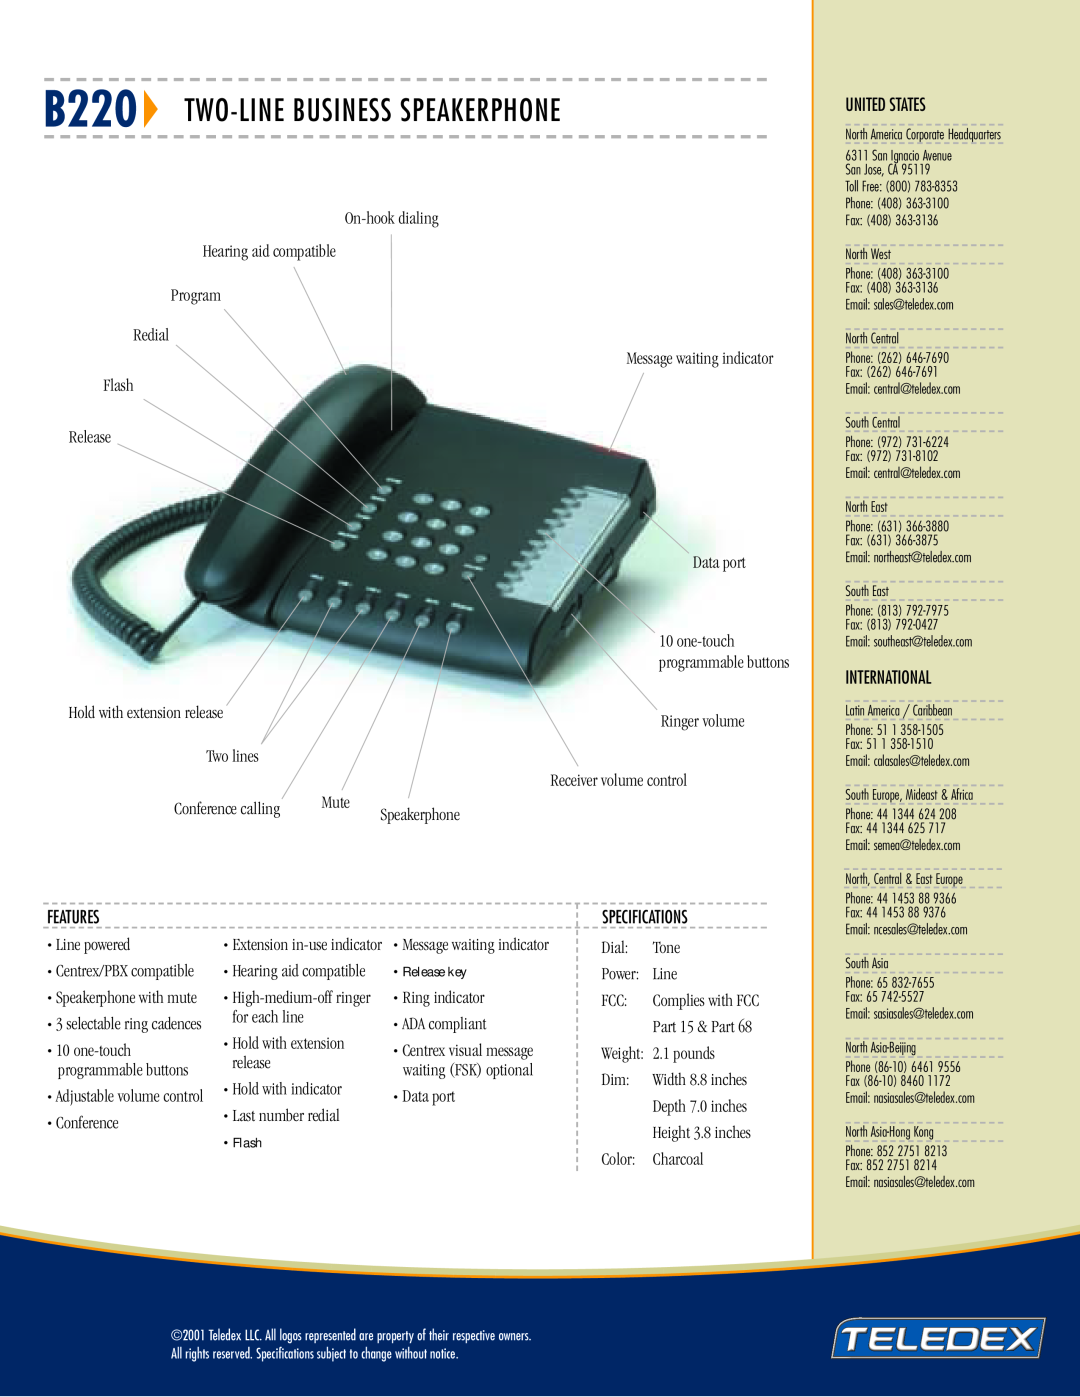 Teledex manual B220 TWO-LINE BUSINESS SPEAKERPHONE, Features, United States, International 